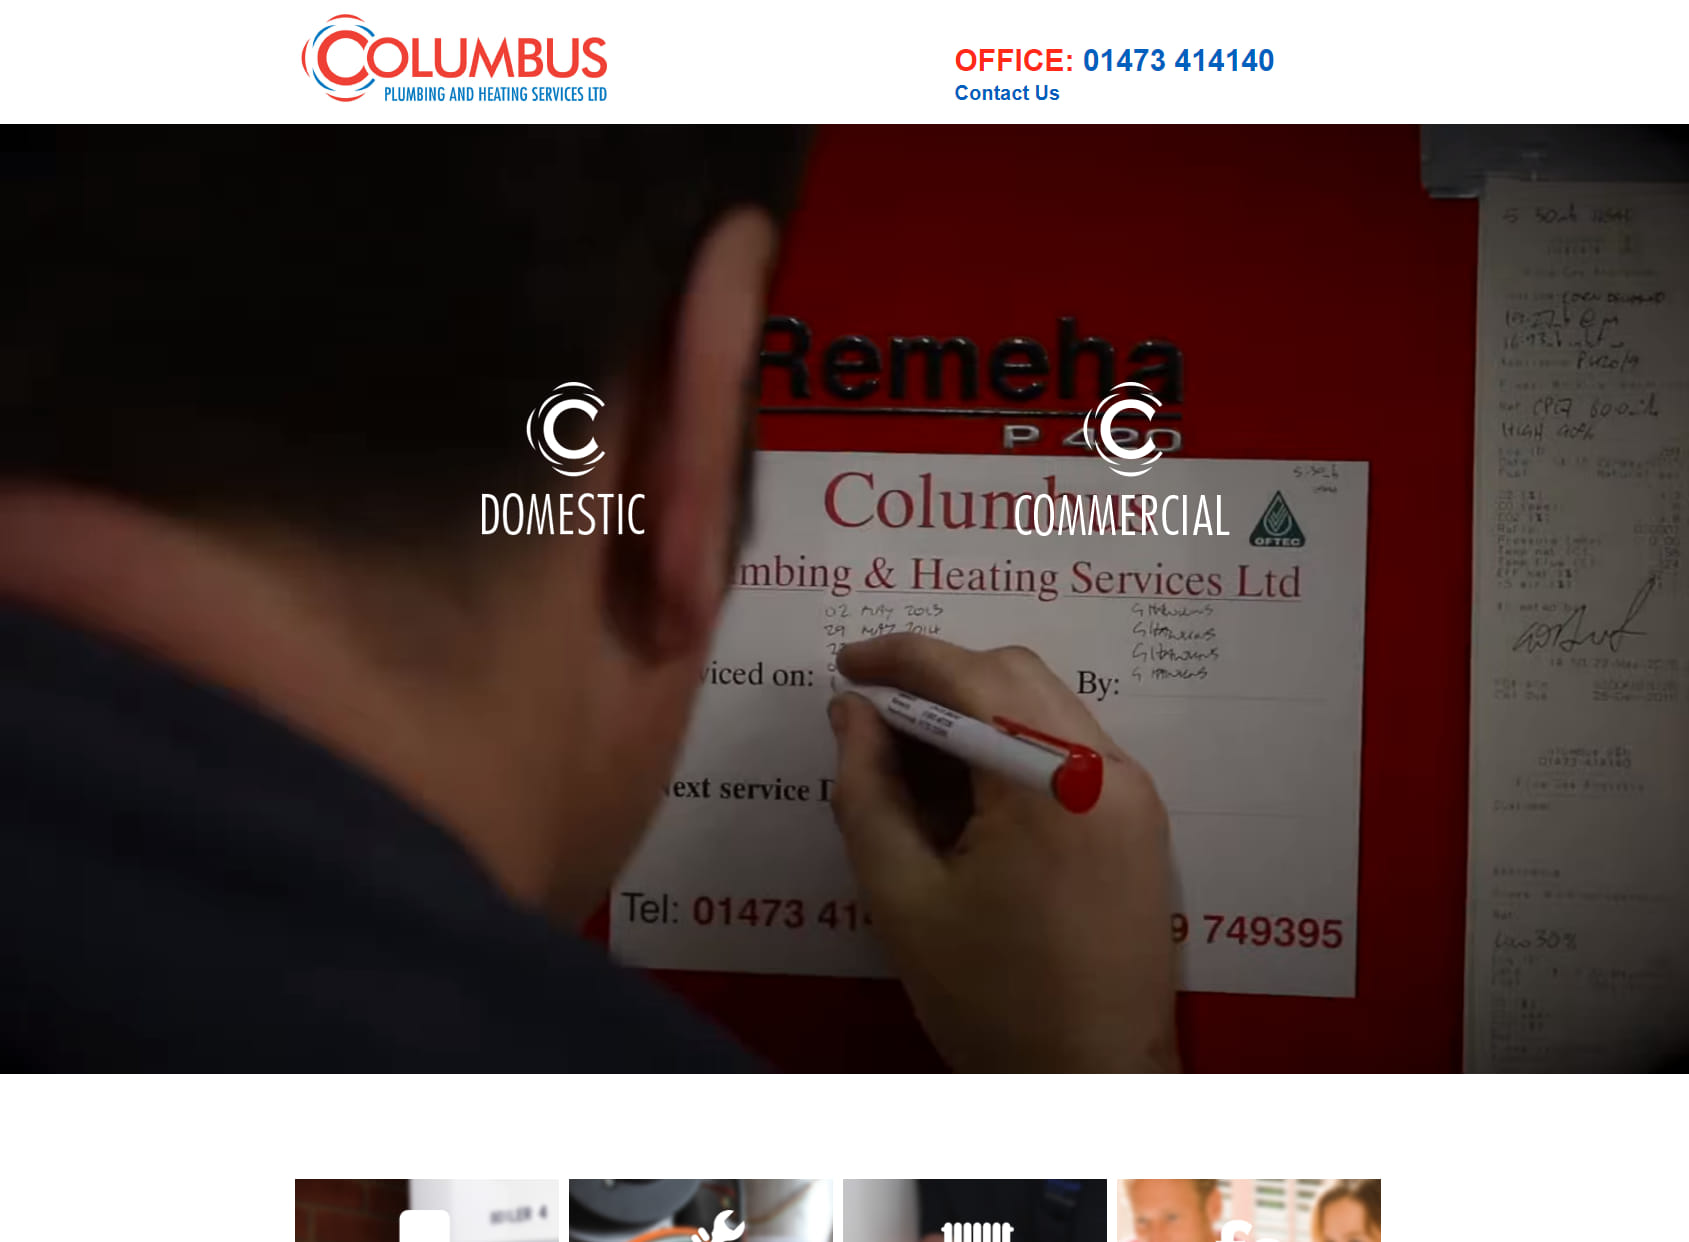 Columbus Plumbing & Heating Services Ltd